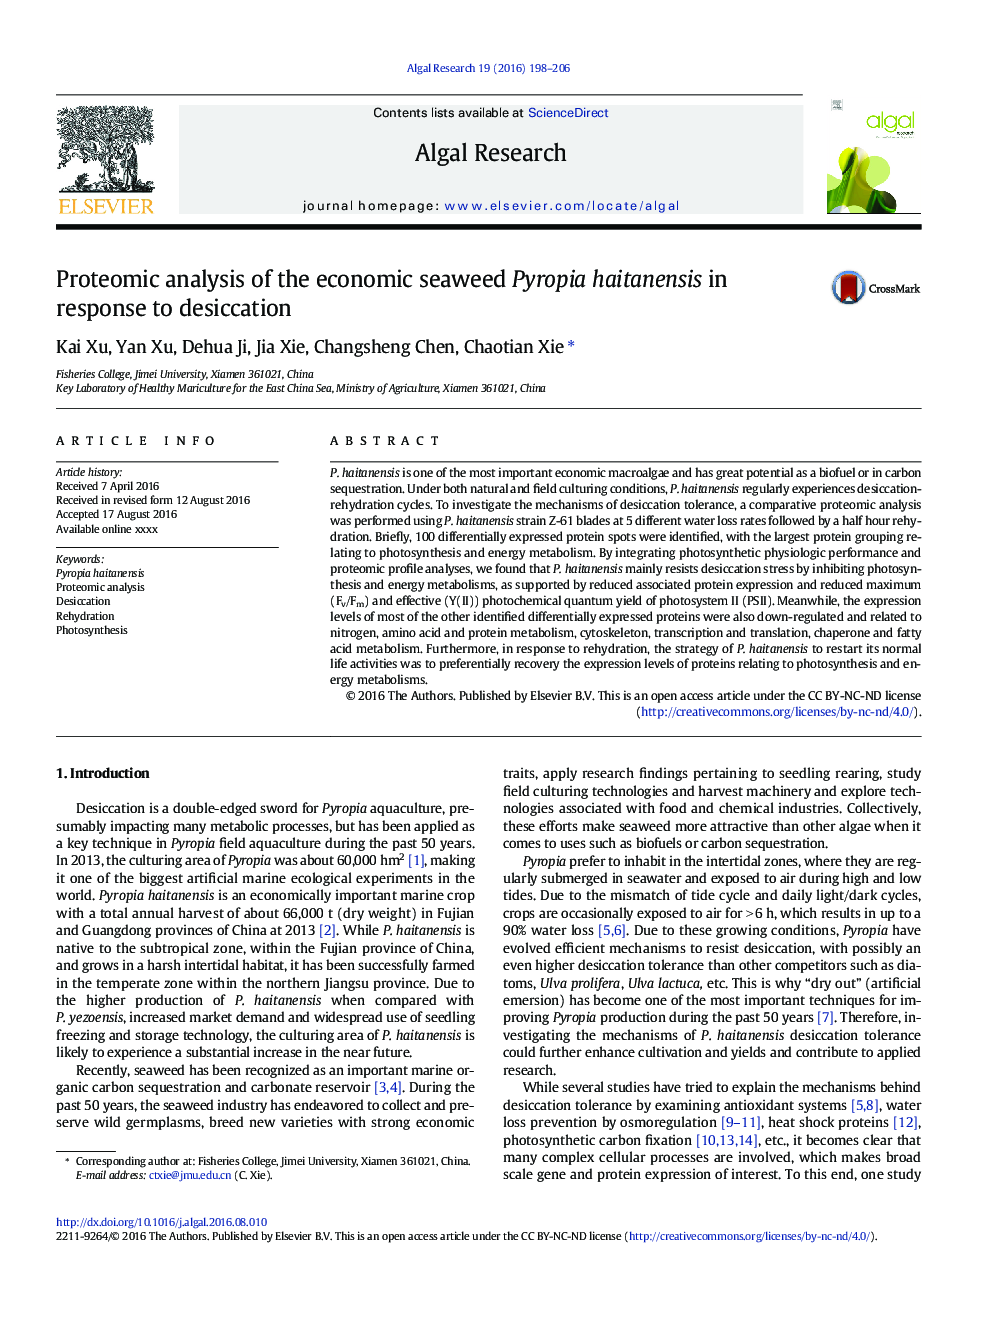 Proteomic analysis of the economic seaweed Pyropia haitanensis in response to desiccation